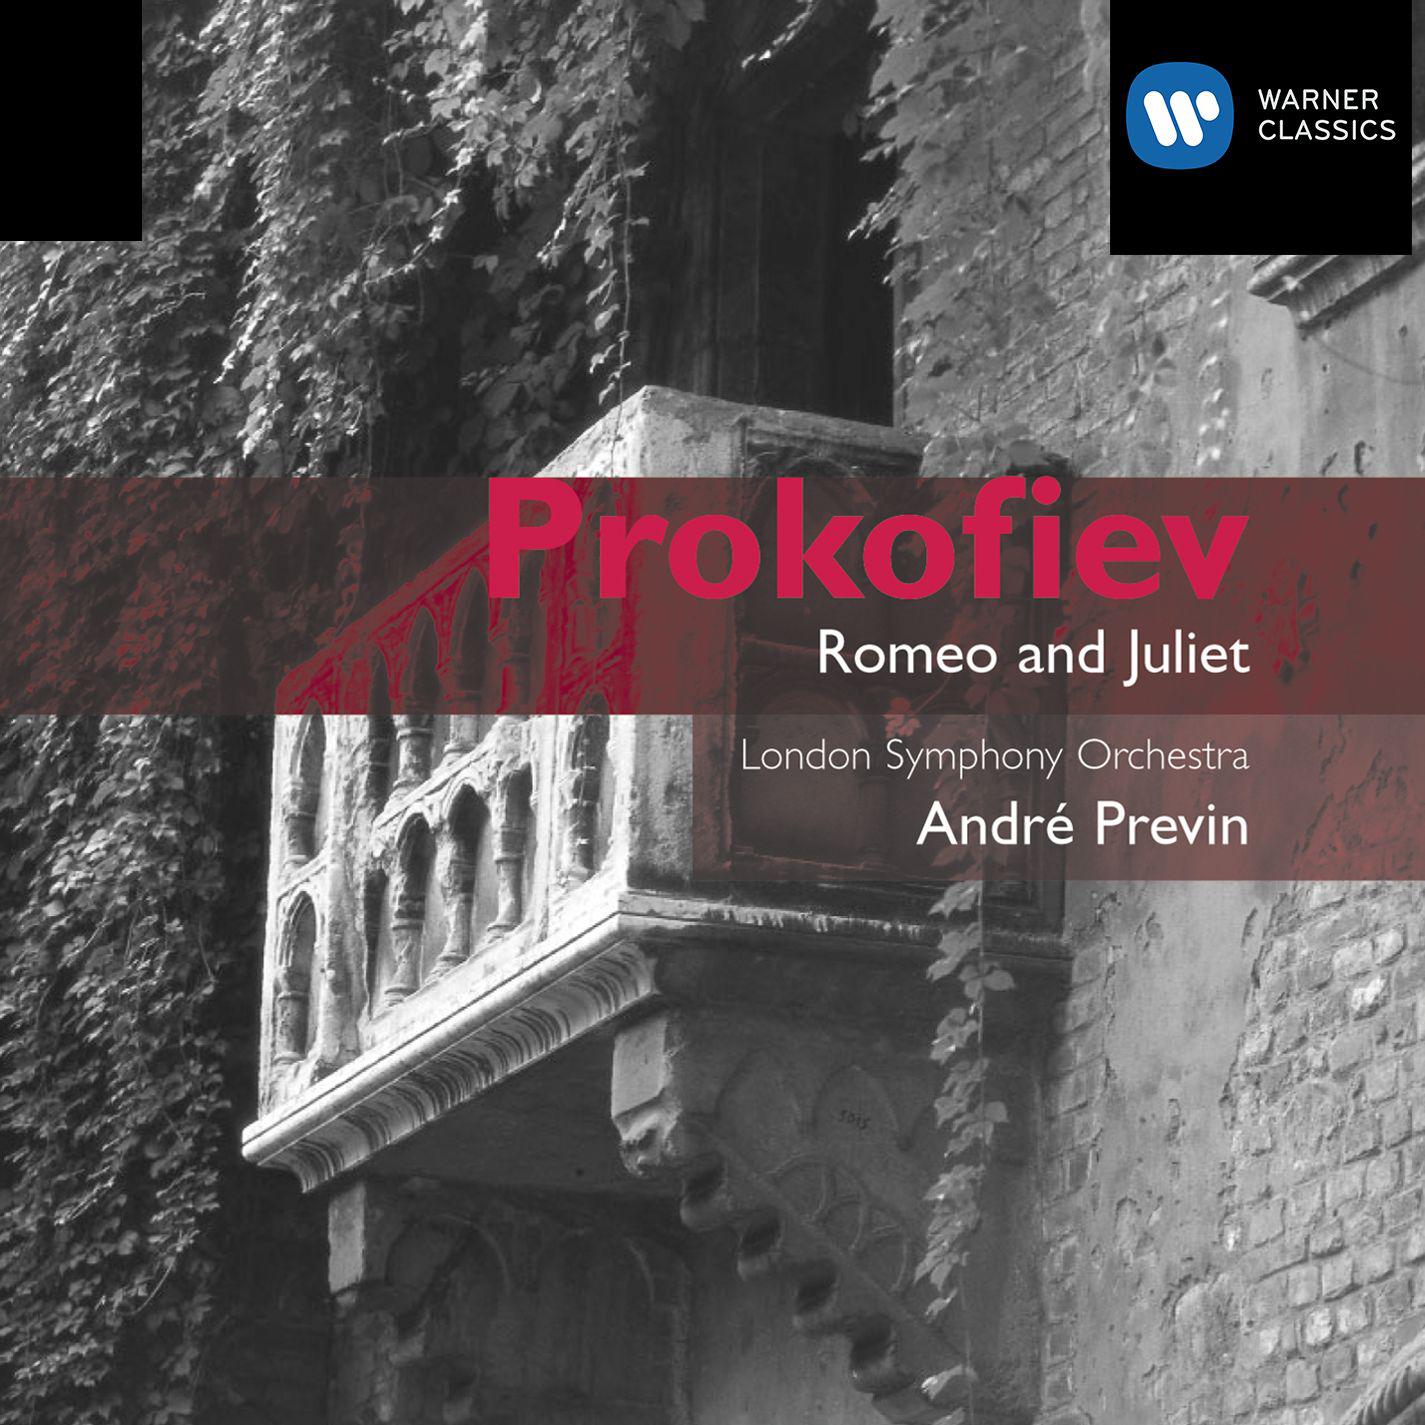 Romeo and Juliet (Complete Ballet), Op. 64, Act 1:No. 3, The Street awakens